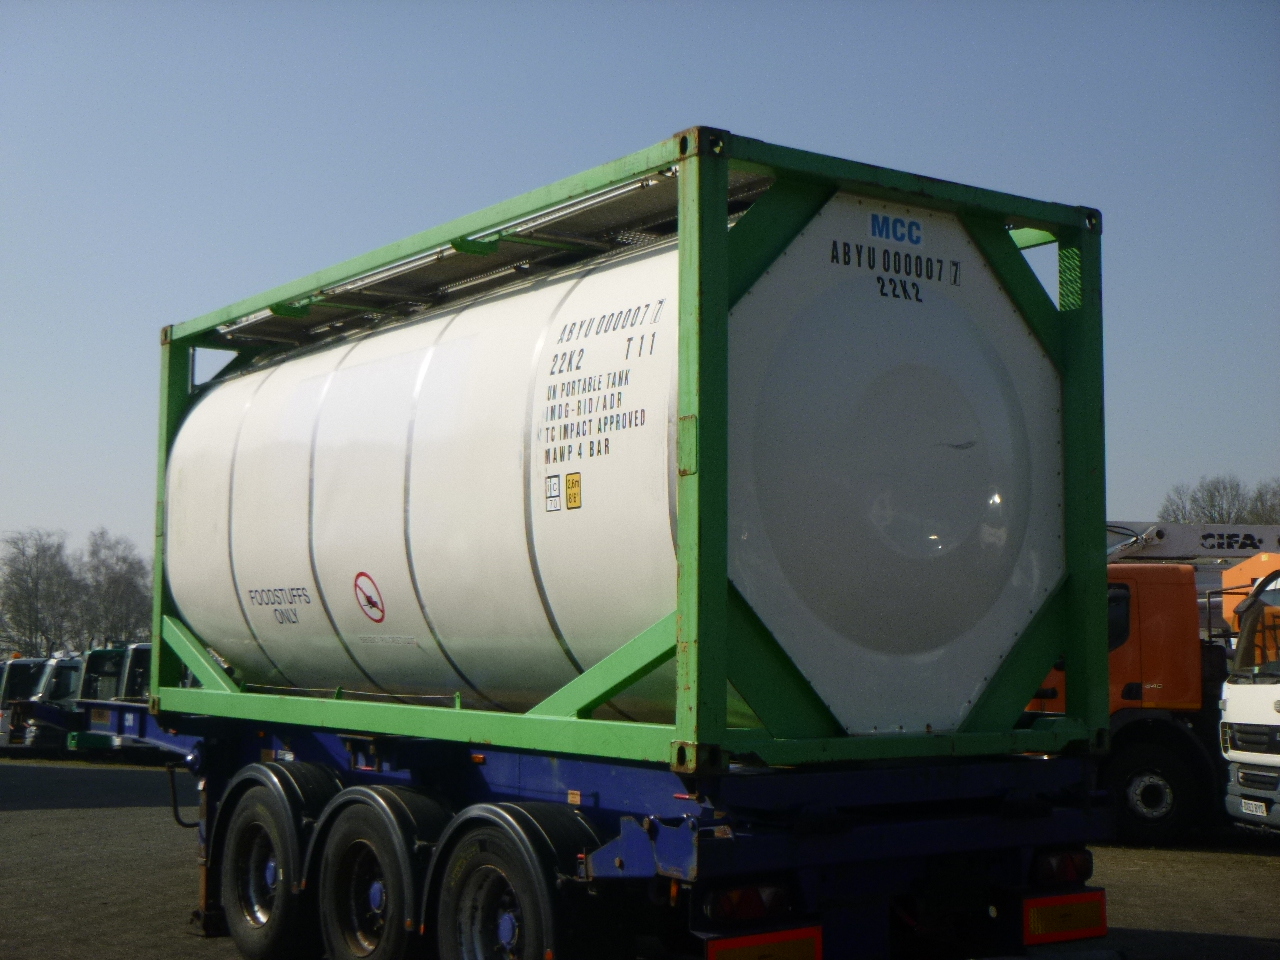 Contentor cisterna, Semi-reboque Danteco Food tank container inox 20 ft / 25 m3 / 1 comp: foto 3